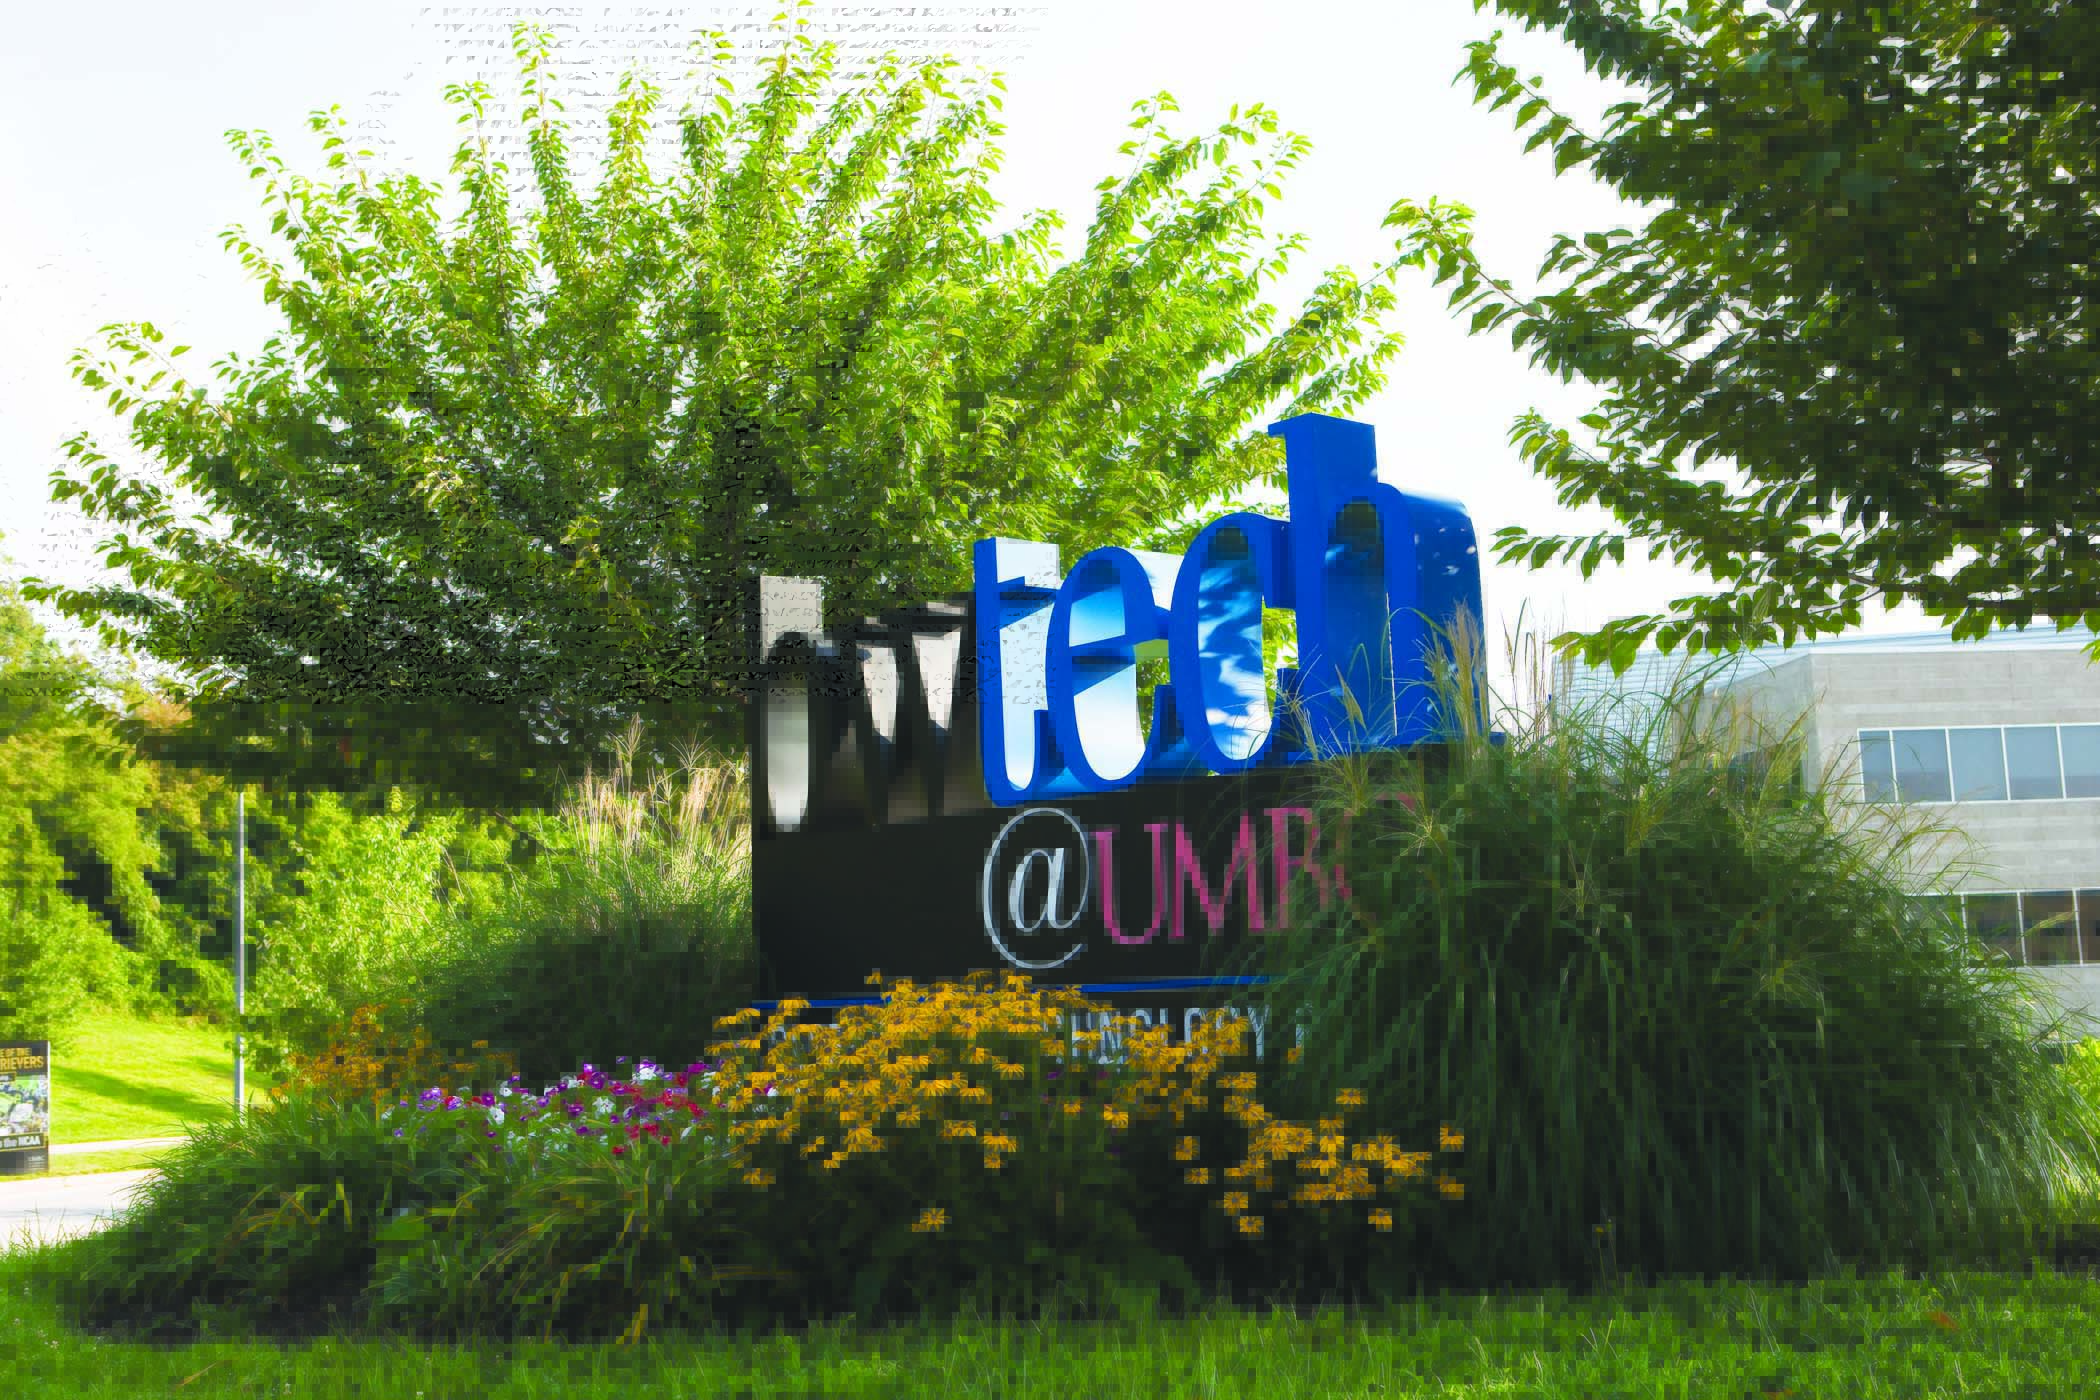 UMBC's bwtech sign.